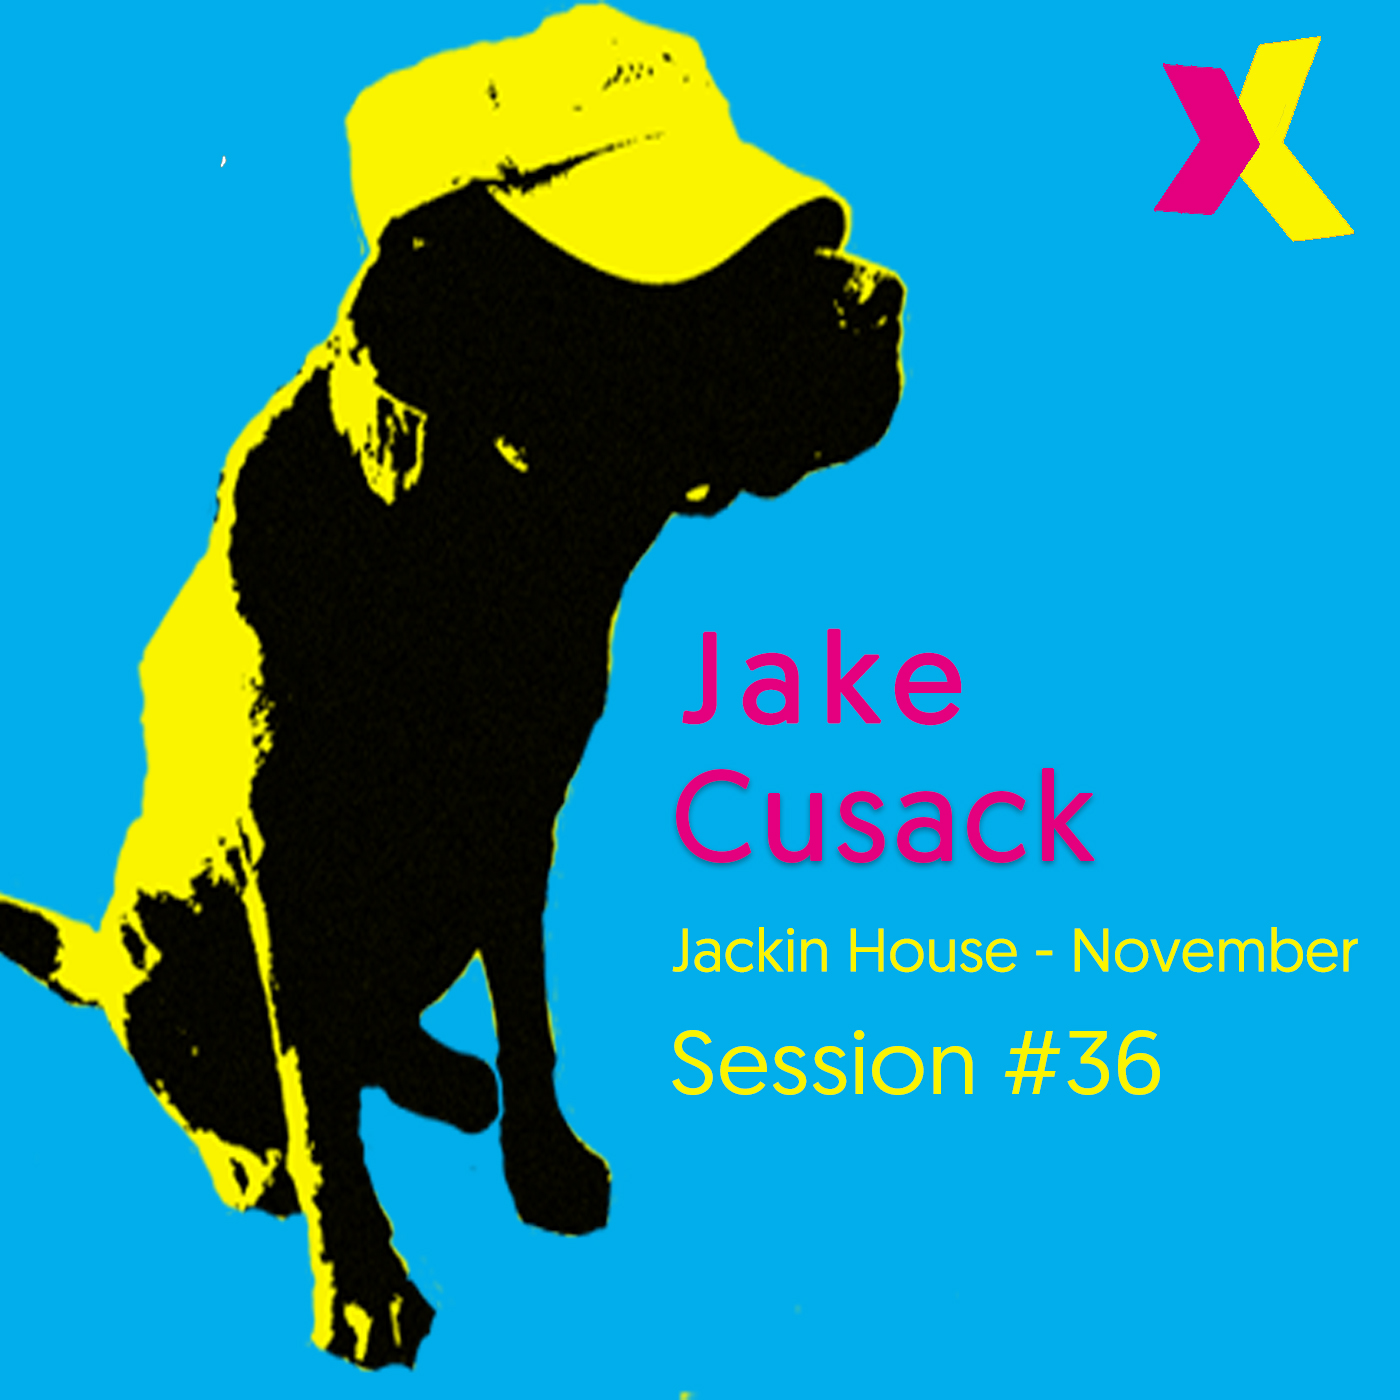 Jake Cusack - Jackin House - November - Session 36